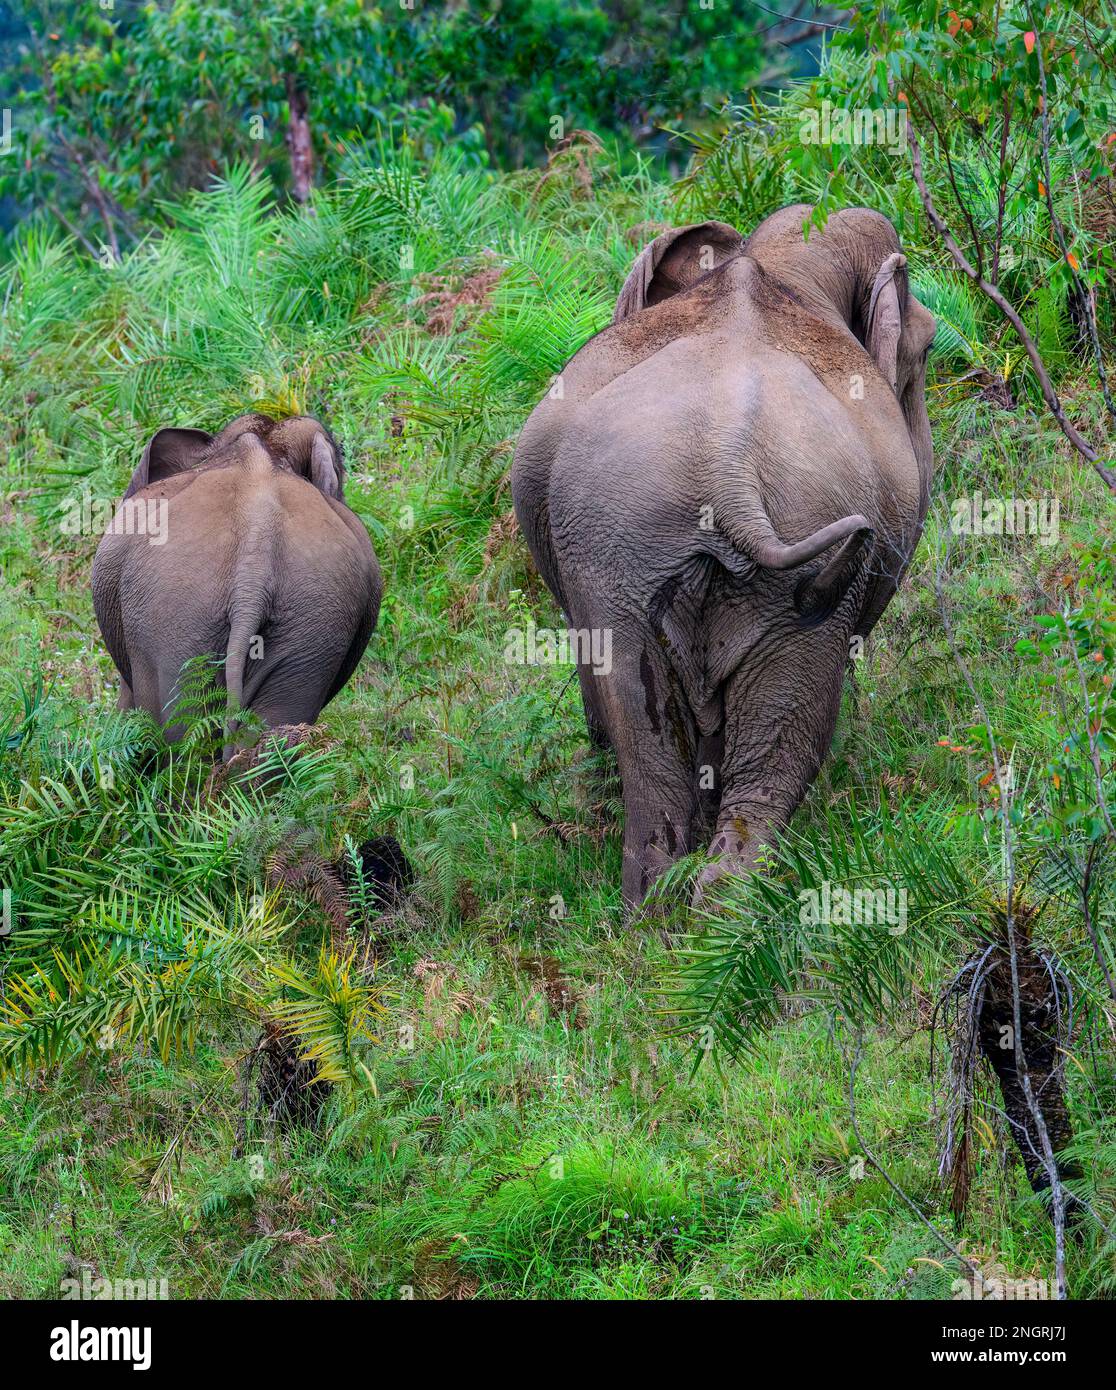 The heard of wild elephants in Kerala forest Stock Photo